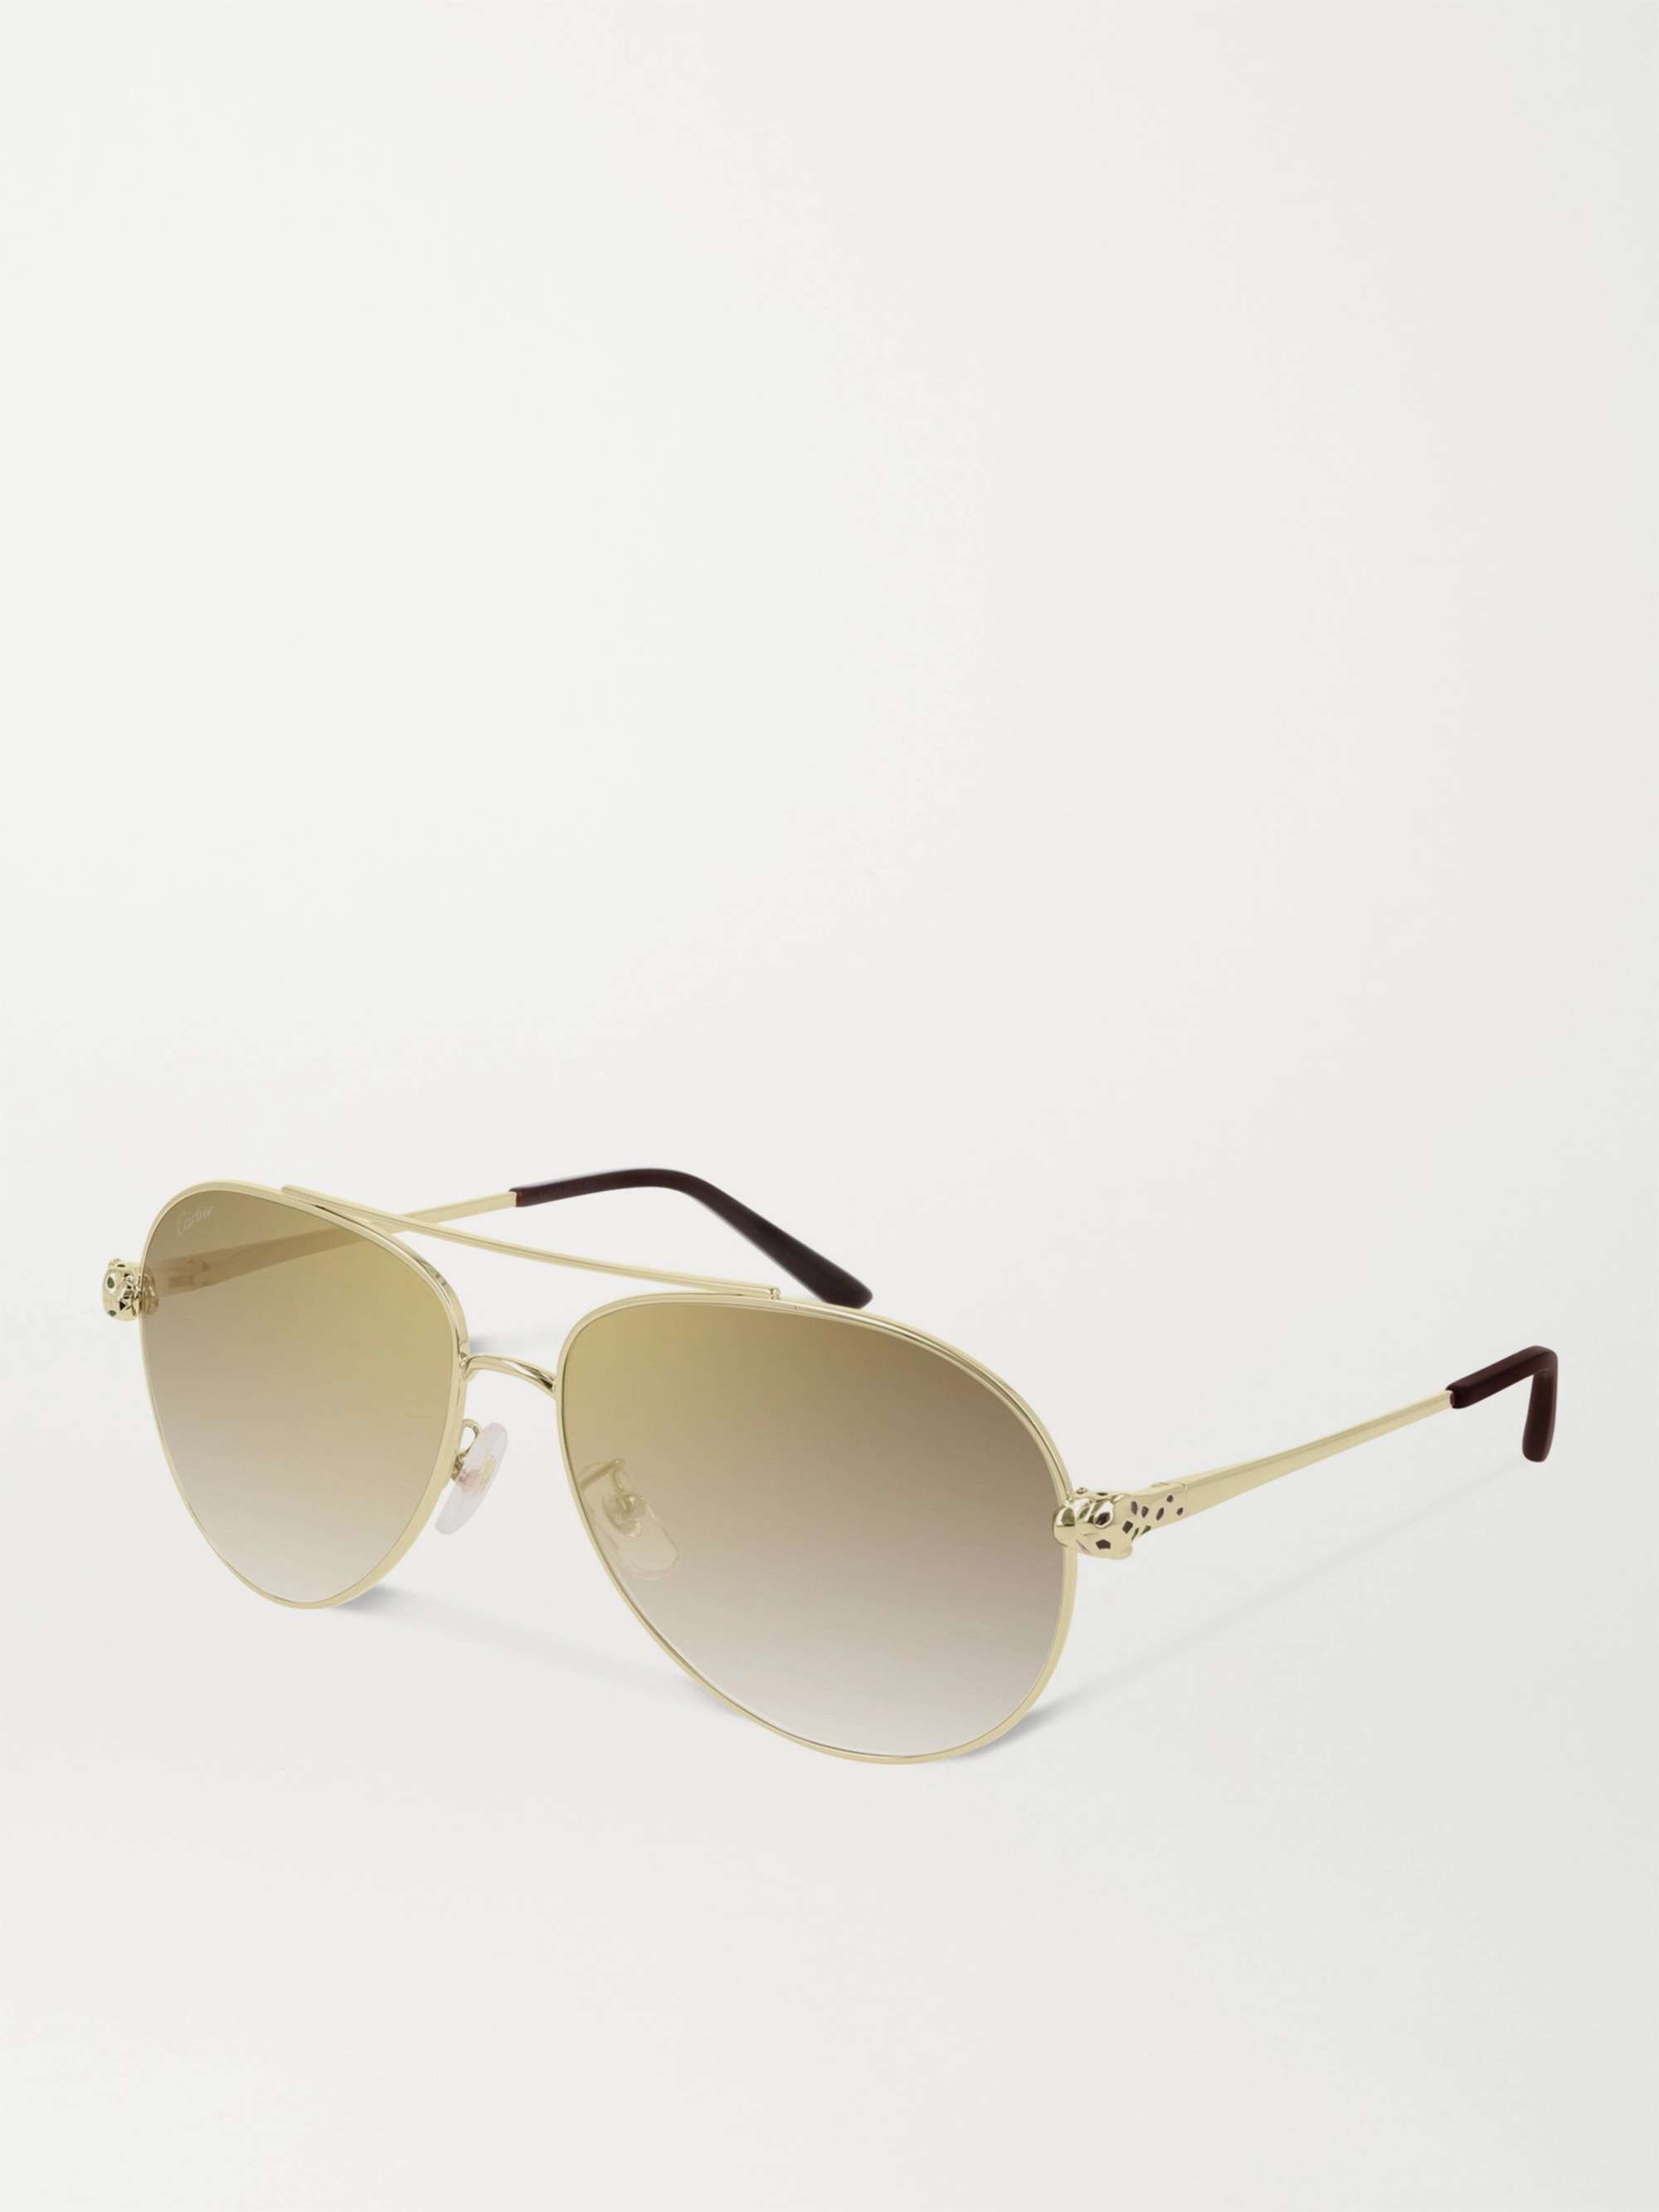 CARTIER EYEWEAR Panthère de Cartier Aviator-Style Gold-Tone Mirrored Sunglasses